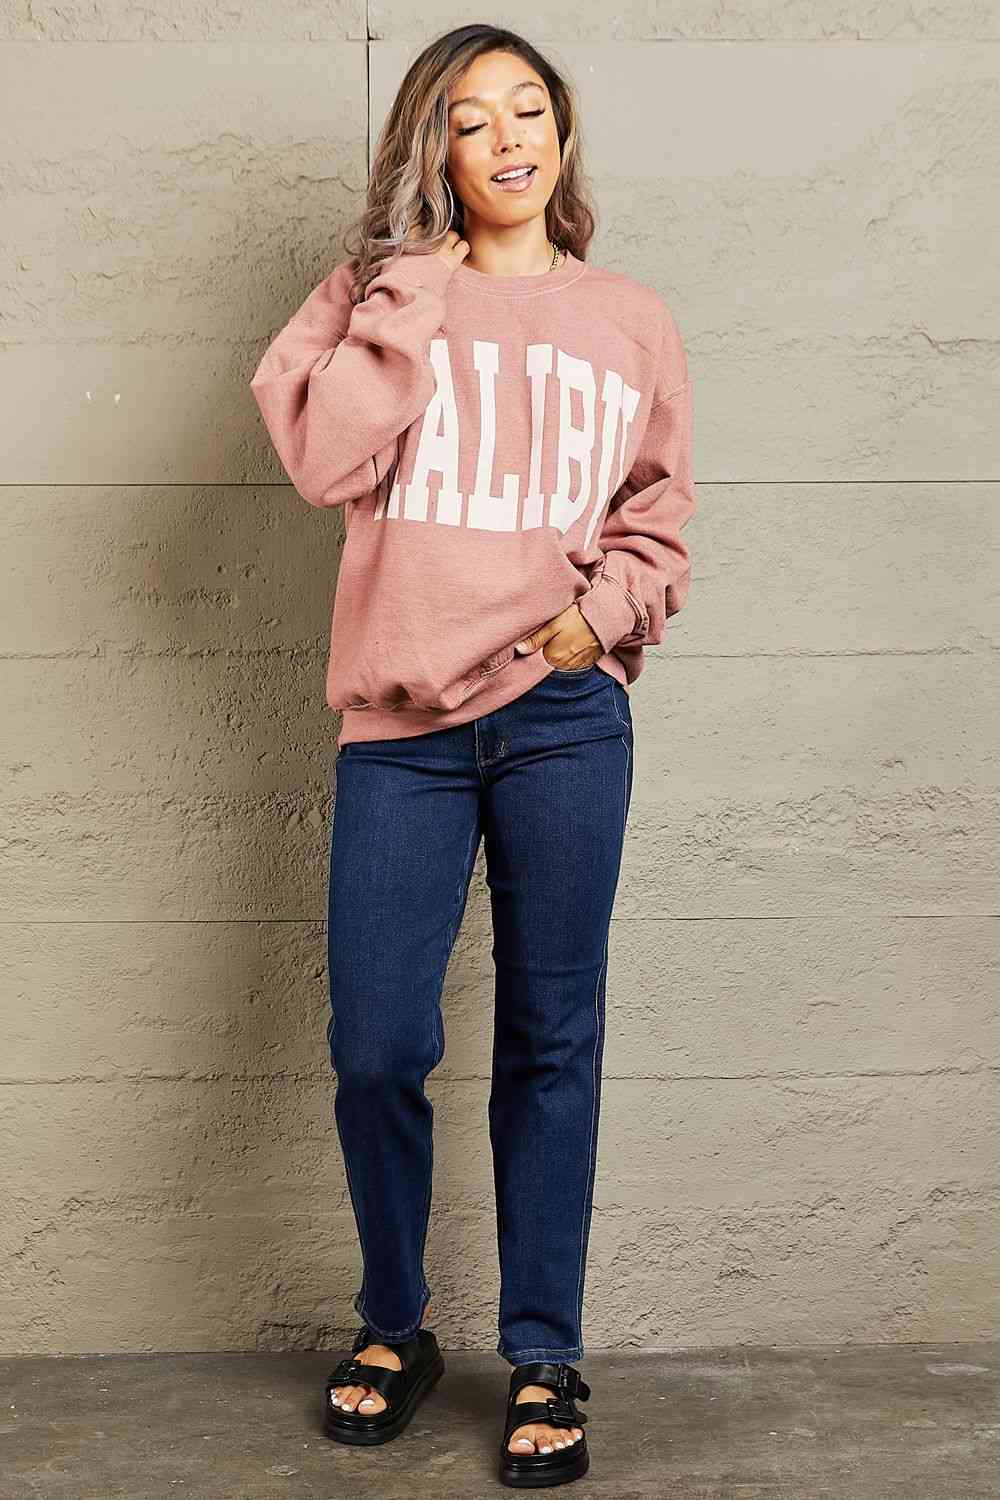 Sweet Claire "Malibu" Oversized Crewneck Sweatshirt